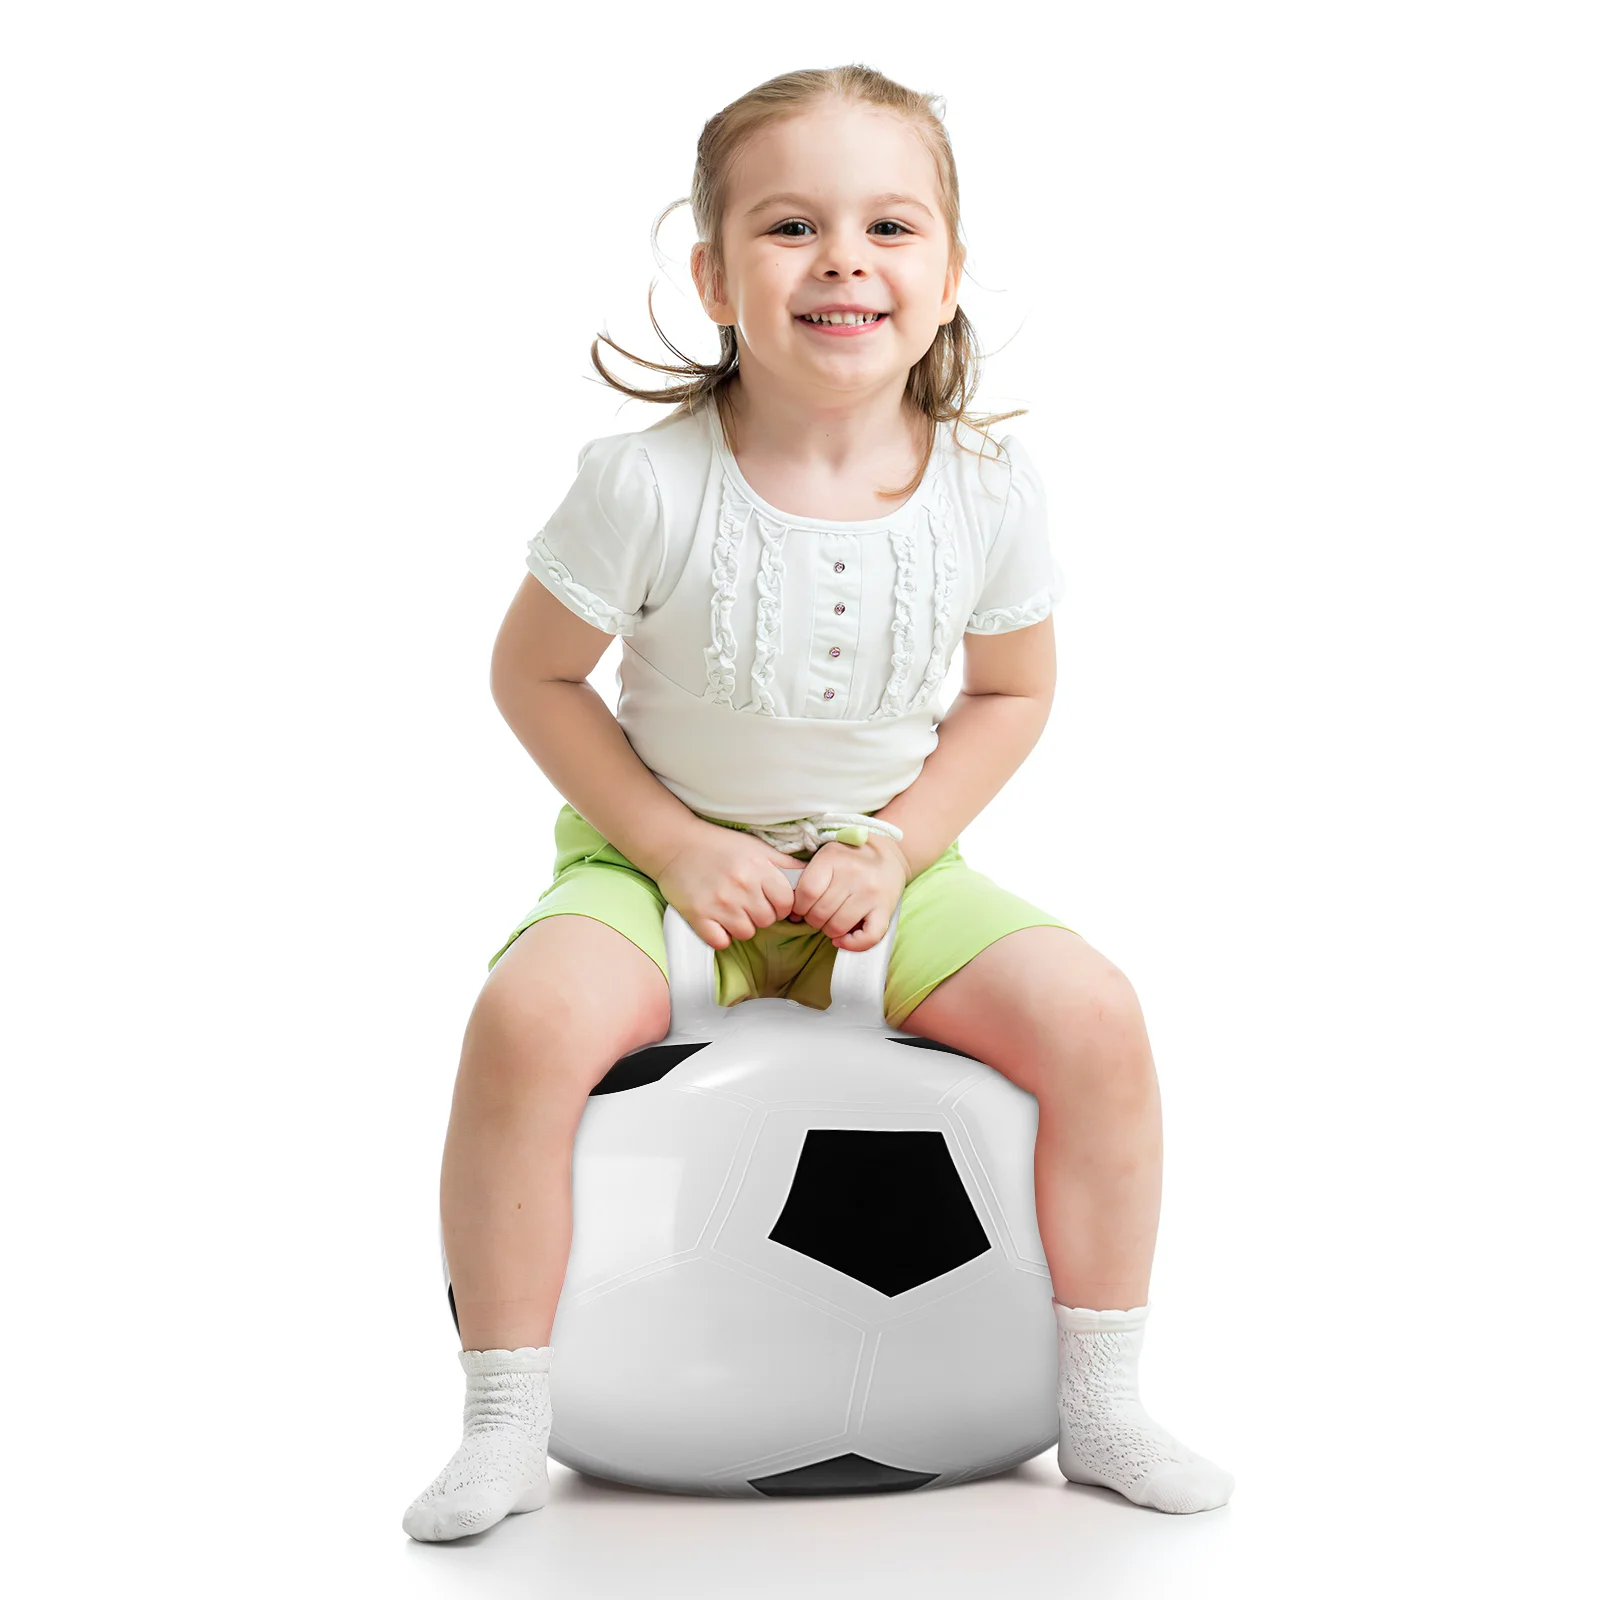 

STOBOK 45cm PVC Inflatable Hopper Ball Hopping Ball Jumping Ball Bouncing Ball with Handle for Kids Air bounce